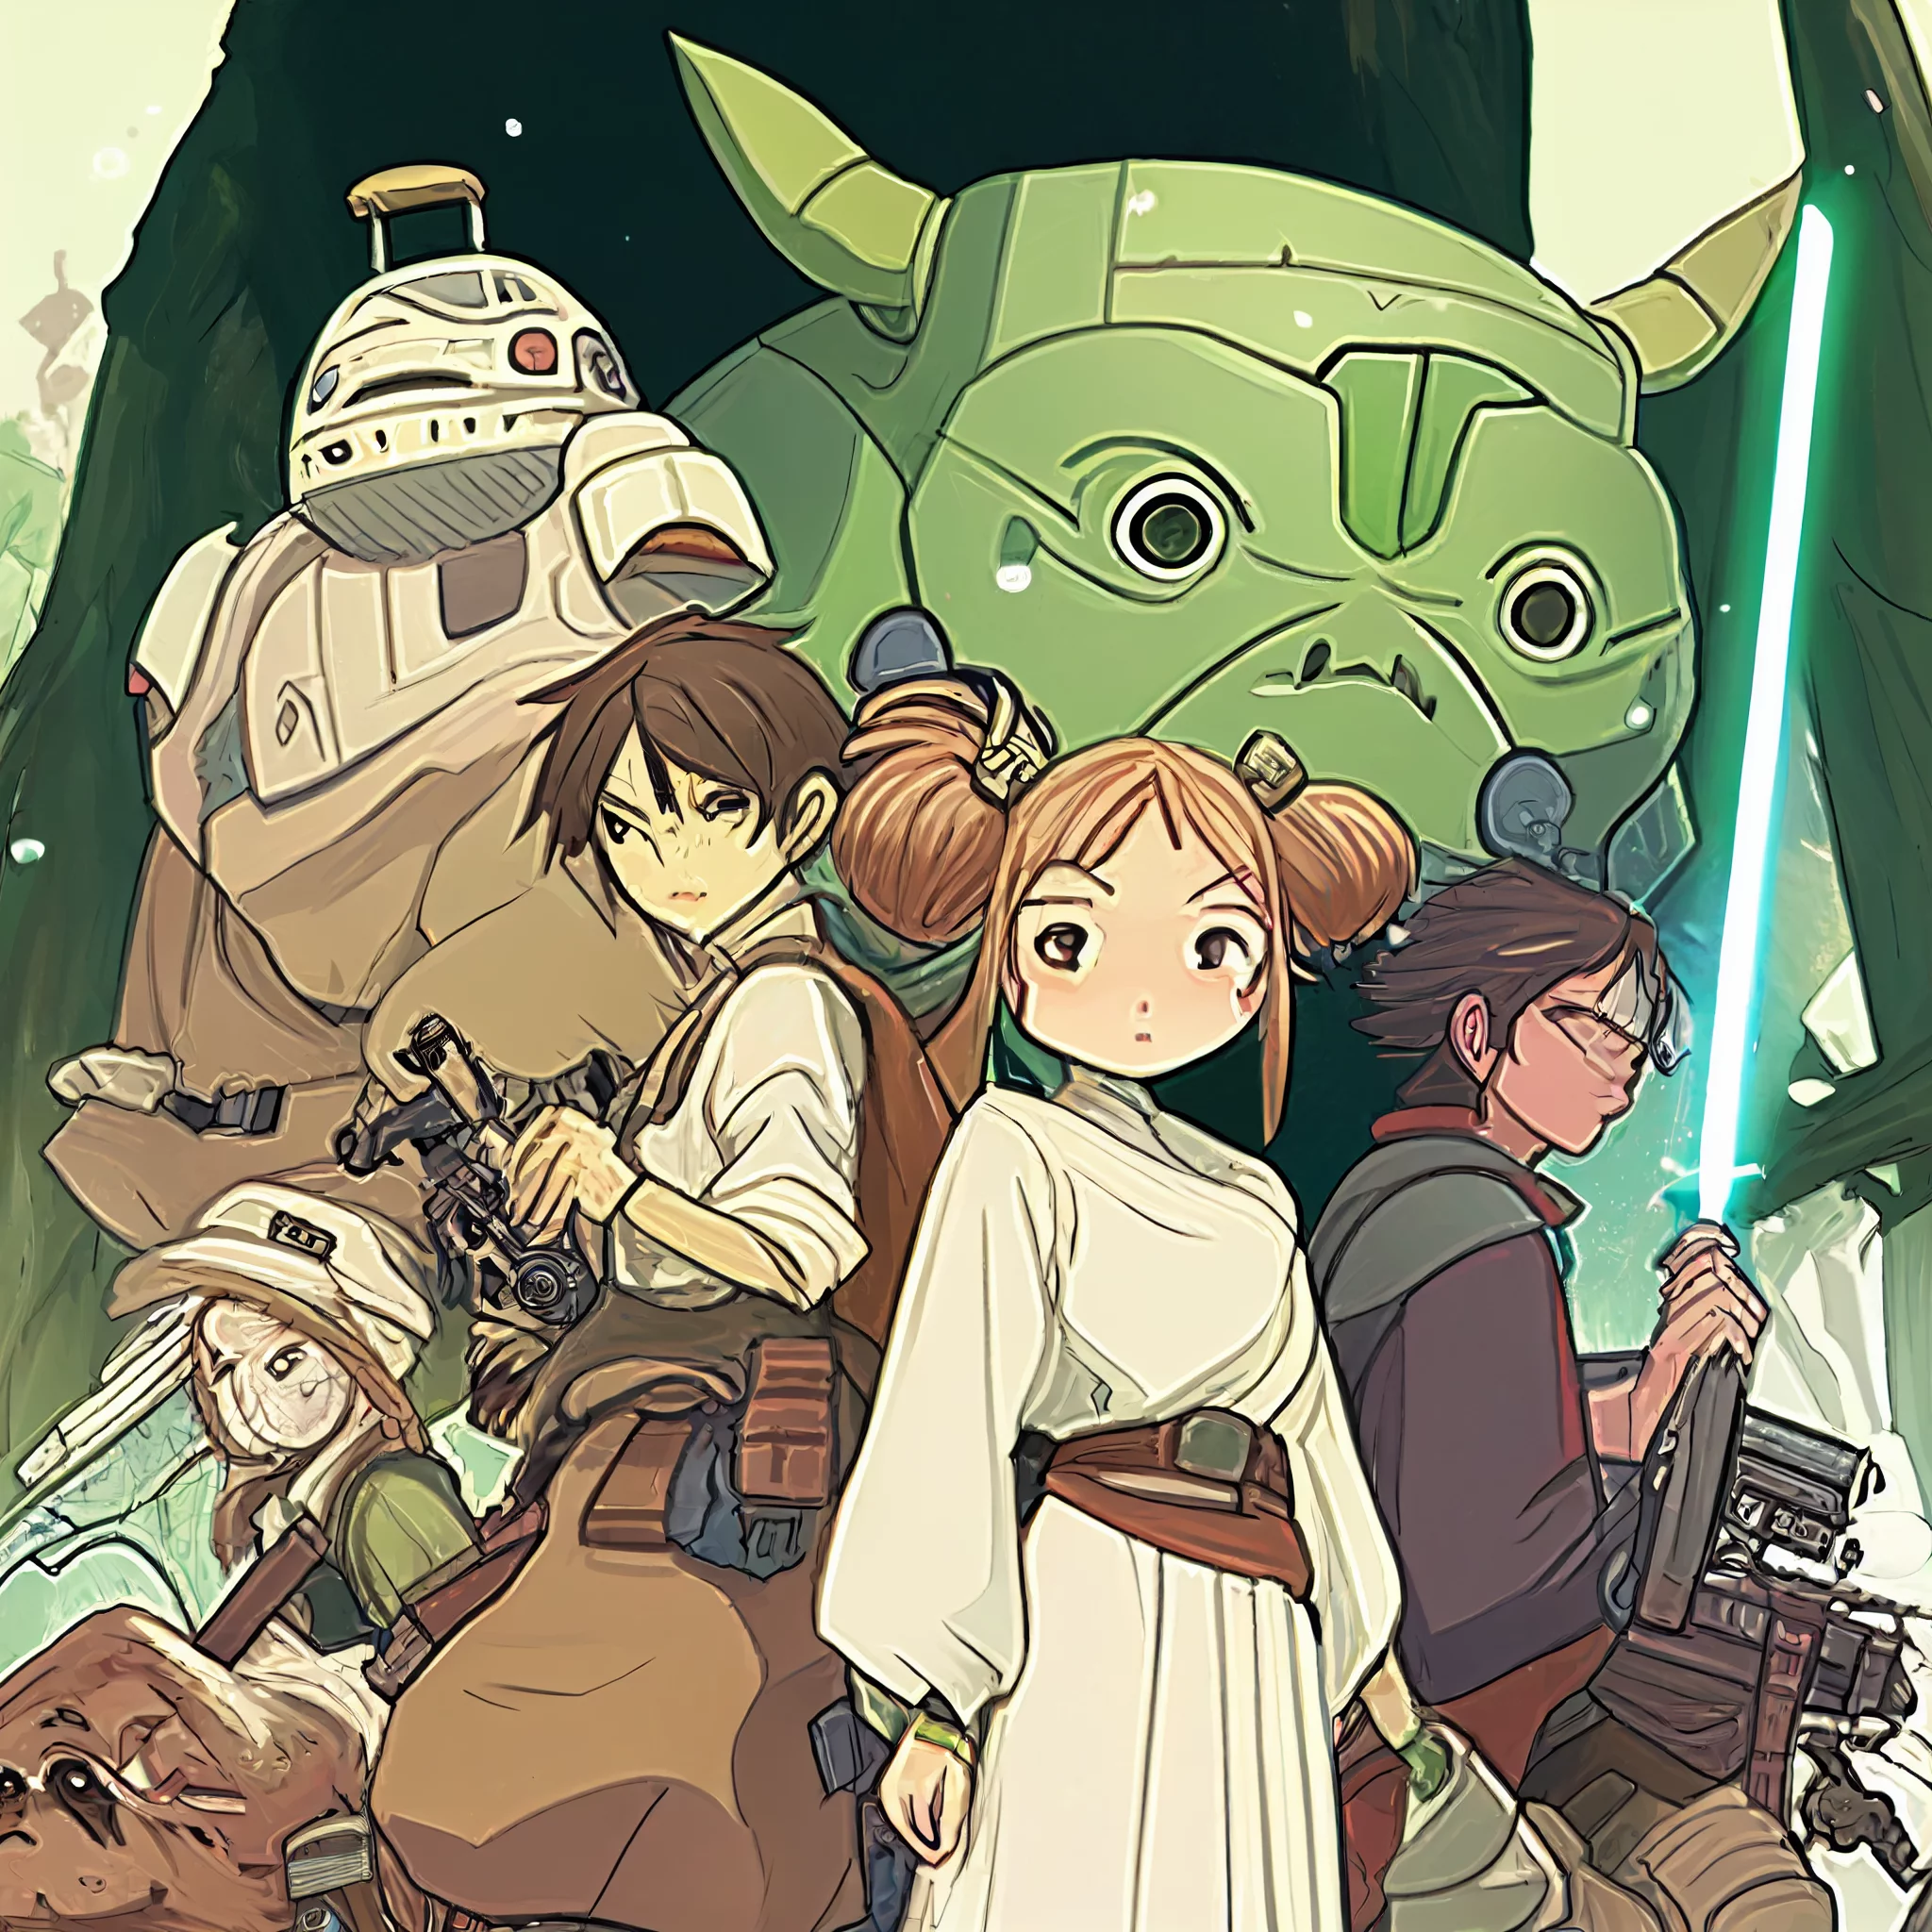 Anime Star Wars by Studio Ghibli